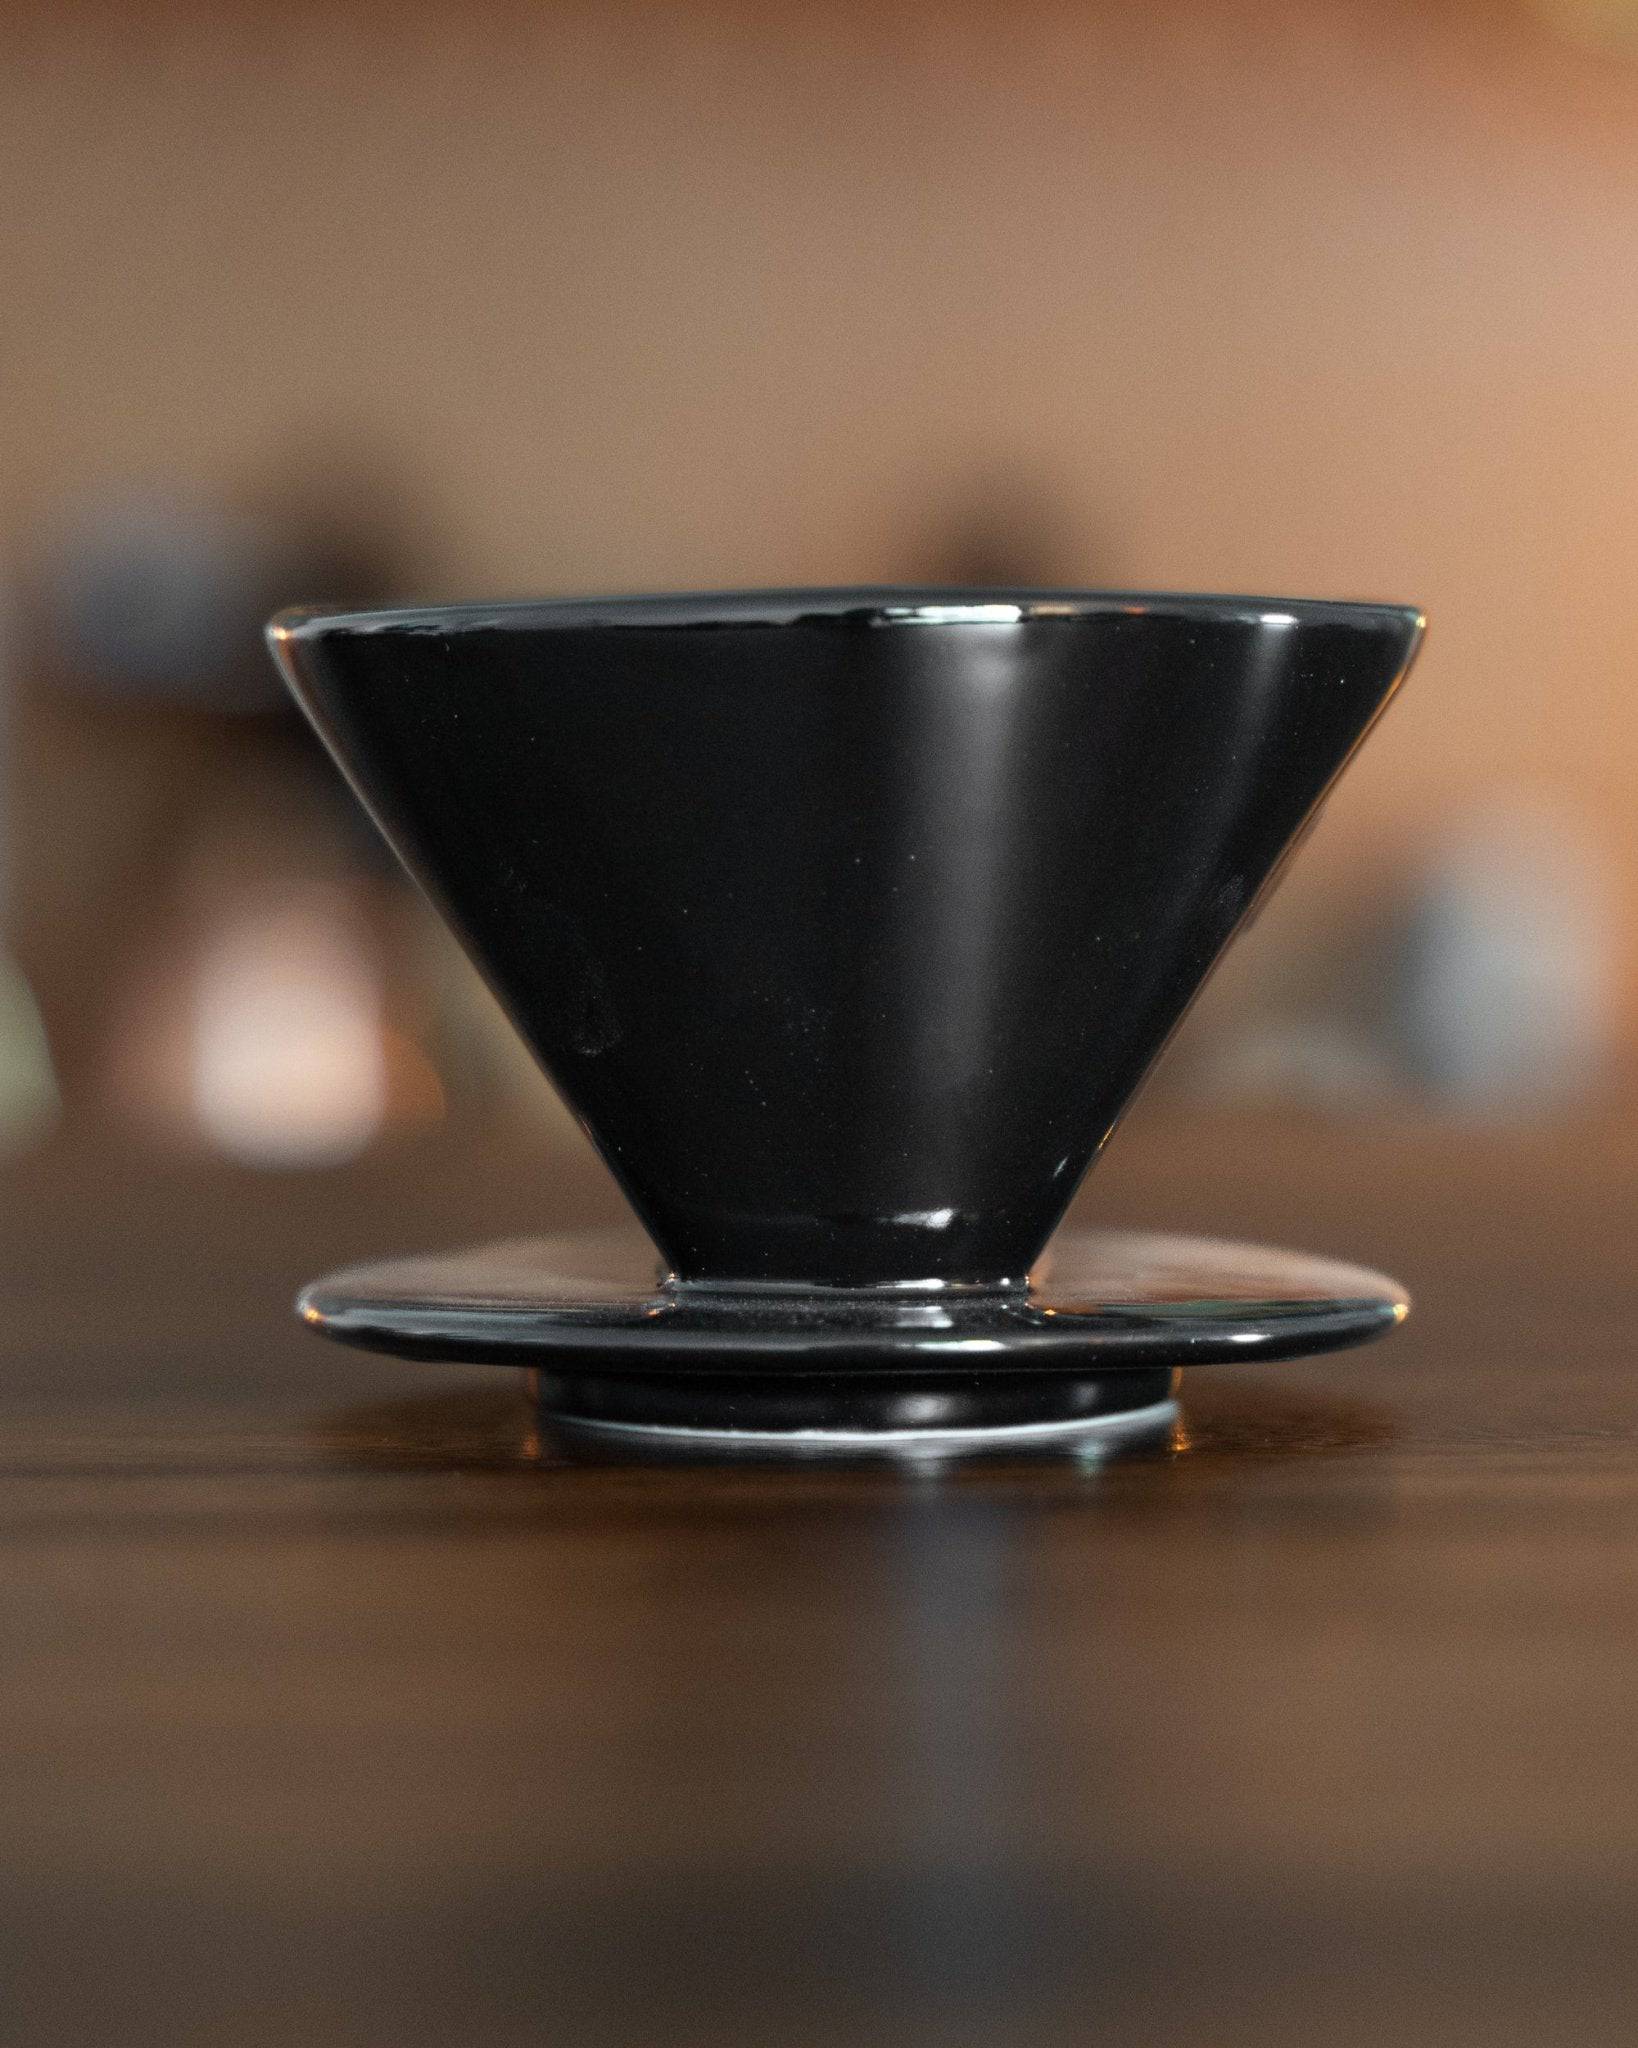 kalita 波佐見燒陶瓷濾杯 101（黑色）日本製造 - Coffee Stage 咖啡舞台